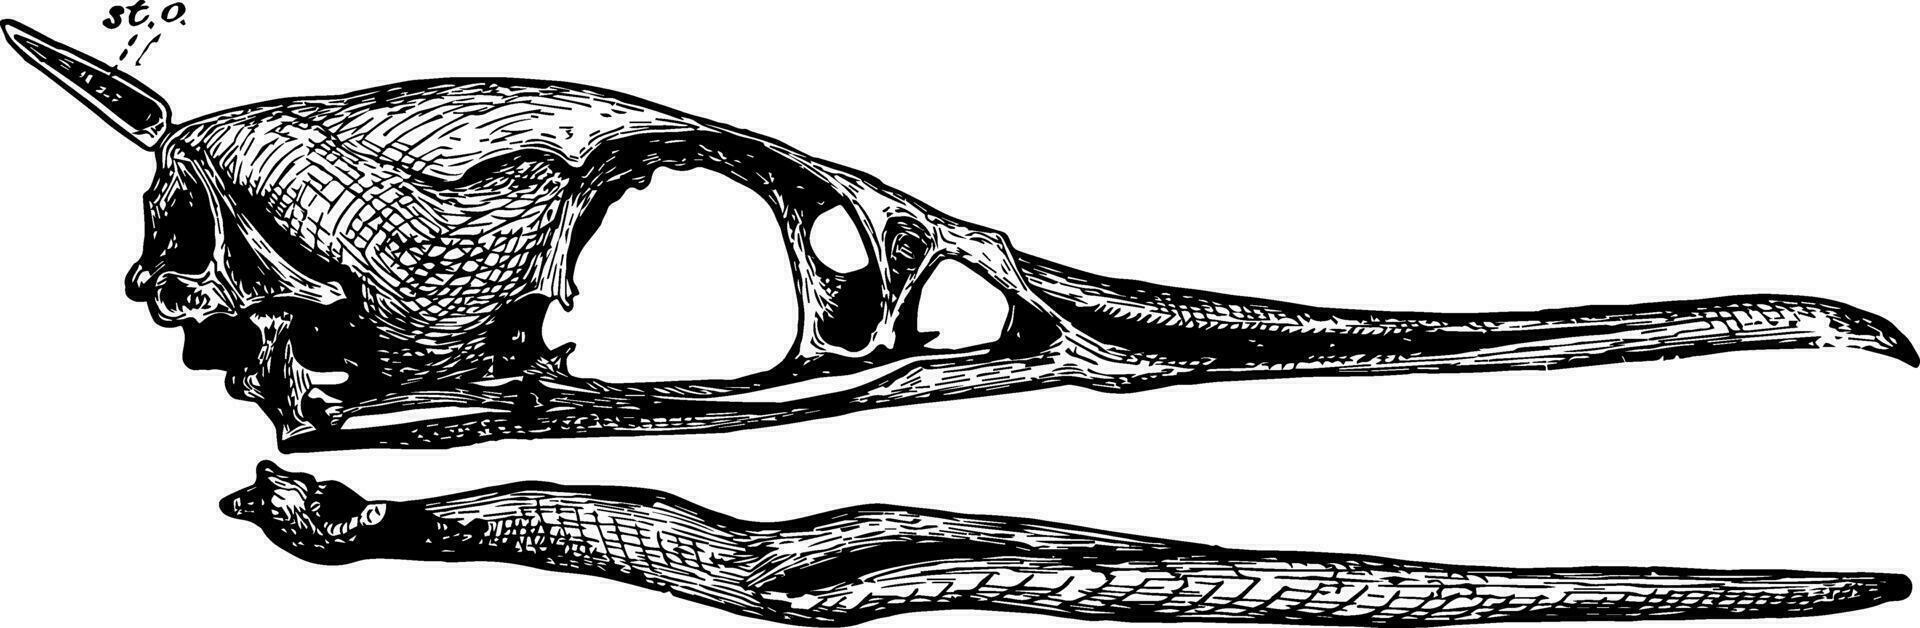 Corvo-marinho crânio vintage ilustração. vetor